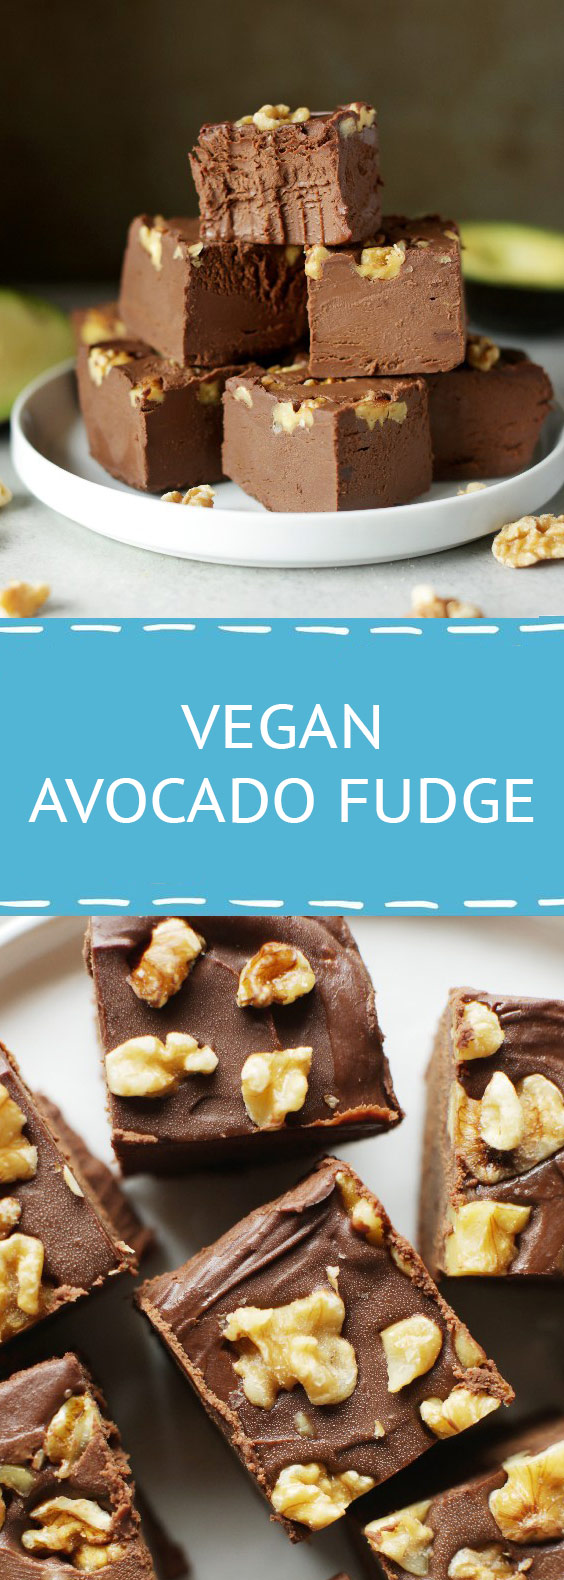 Vegan Avocado Fudge